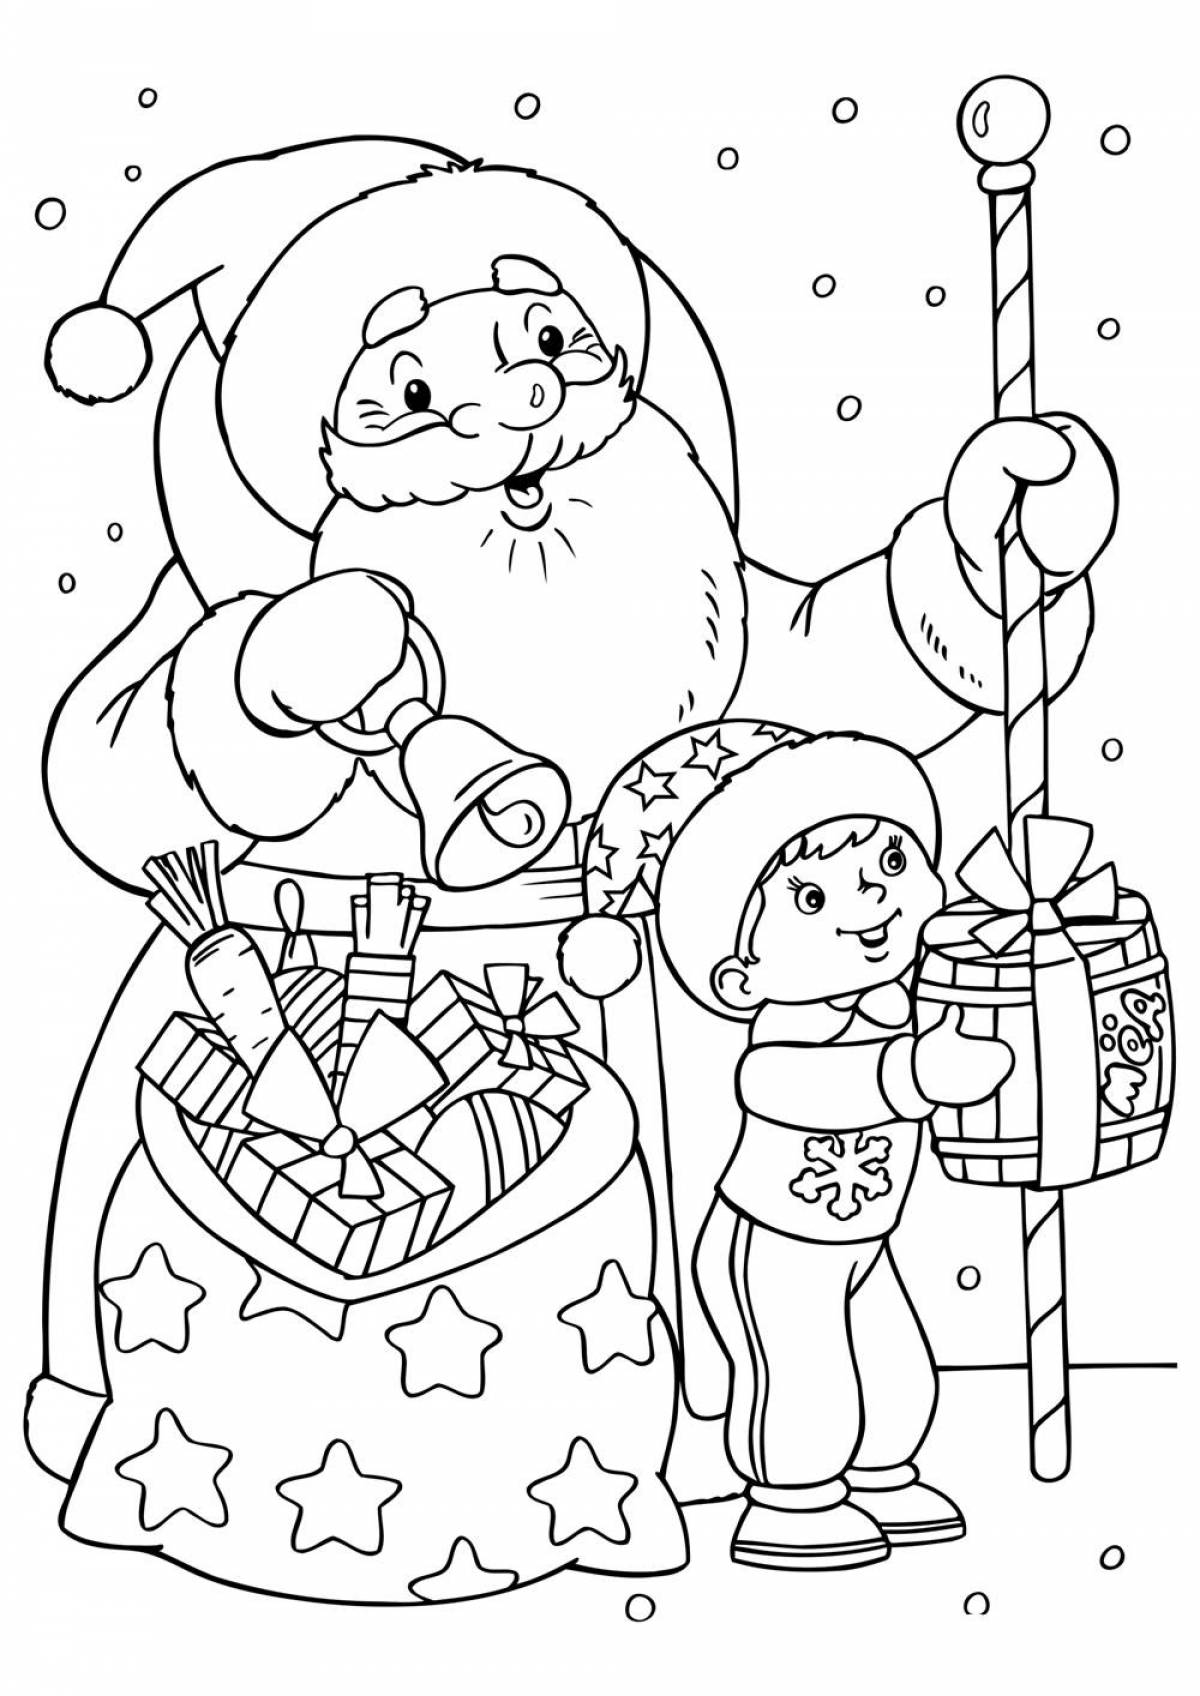 Luminous Christmas coloring book for children